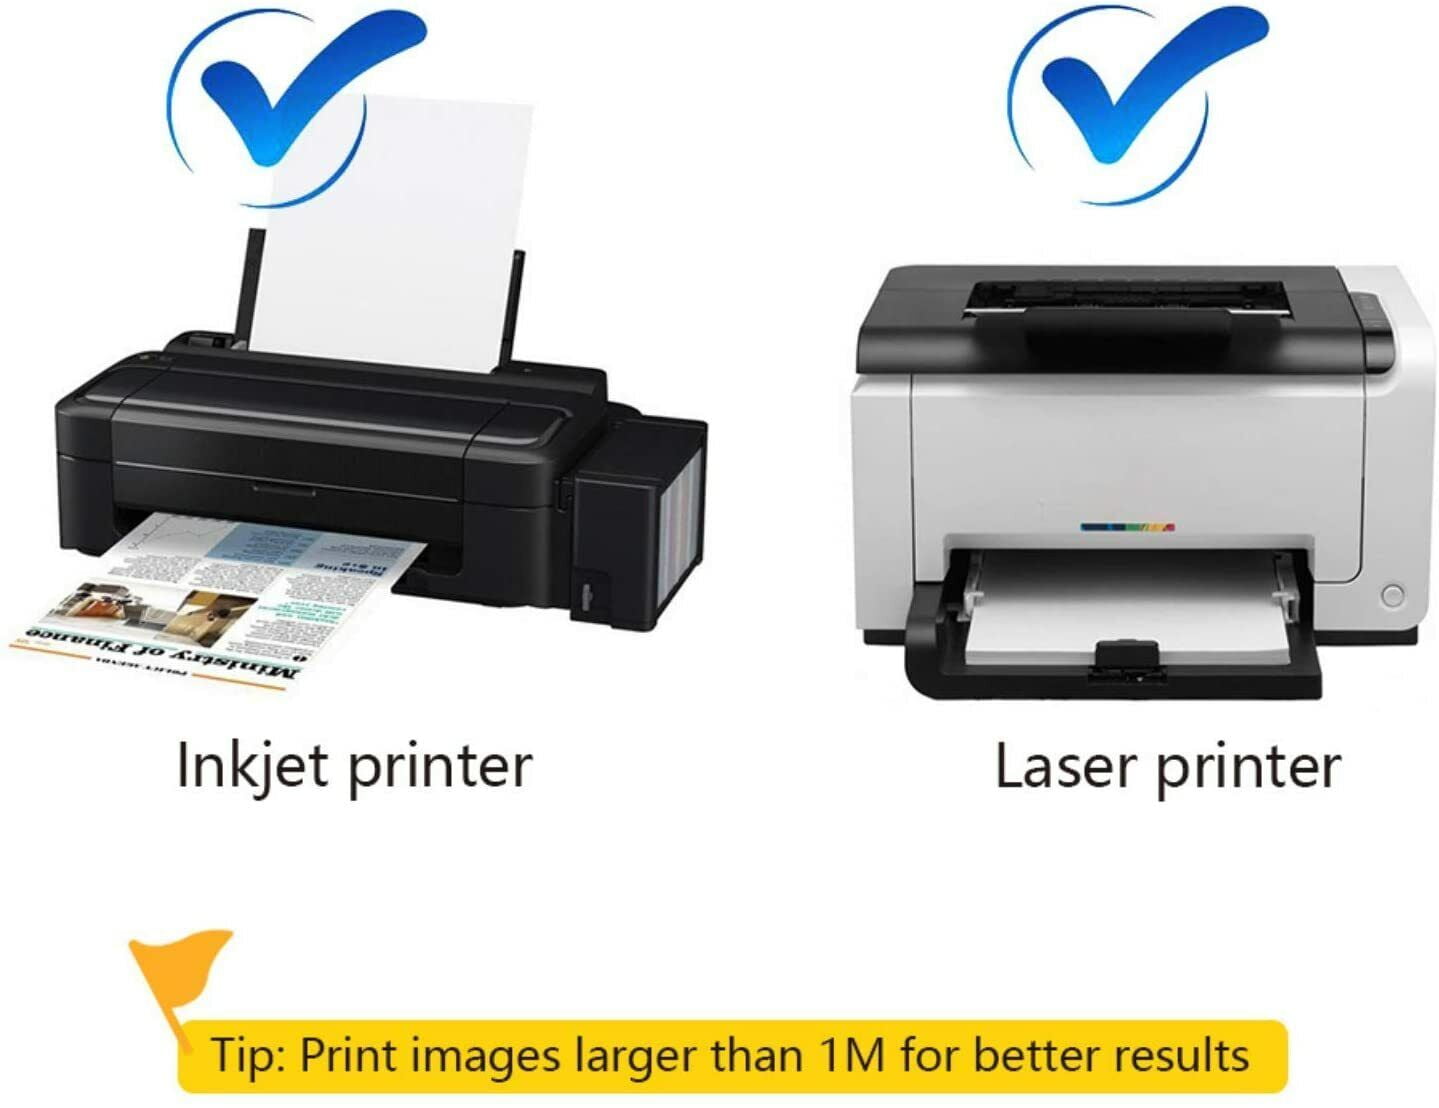 HTVRONT 15x Inkjet Printable Transparent Clear Vinyl Sticker Paper